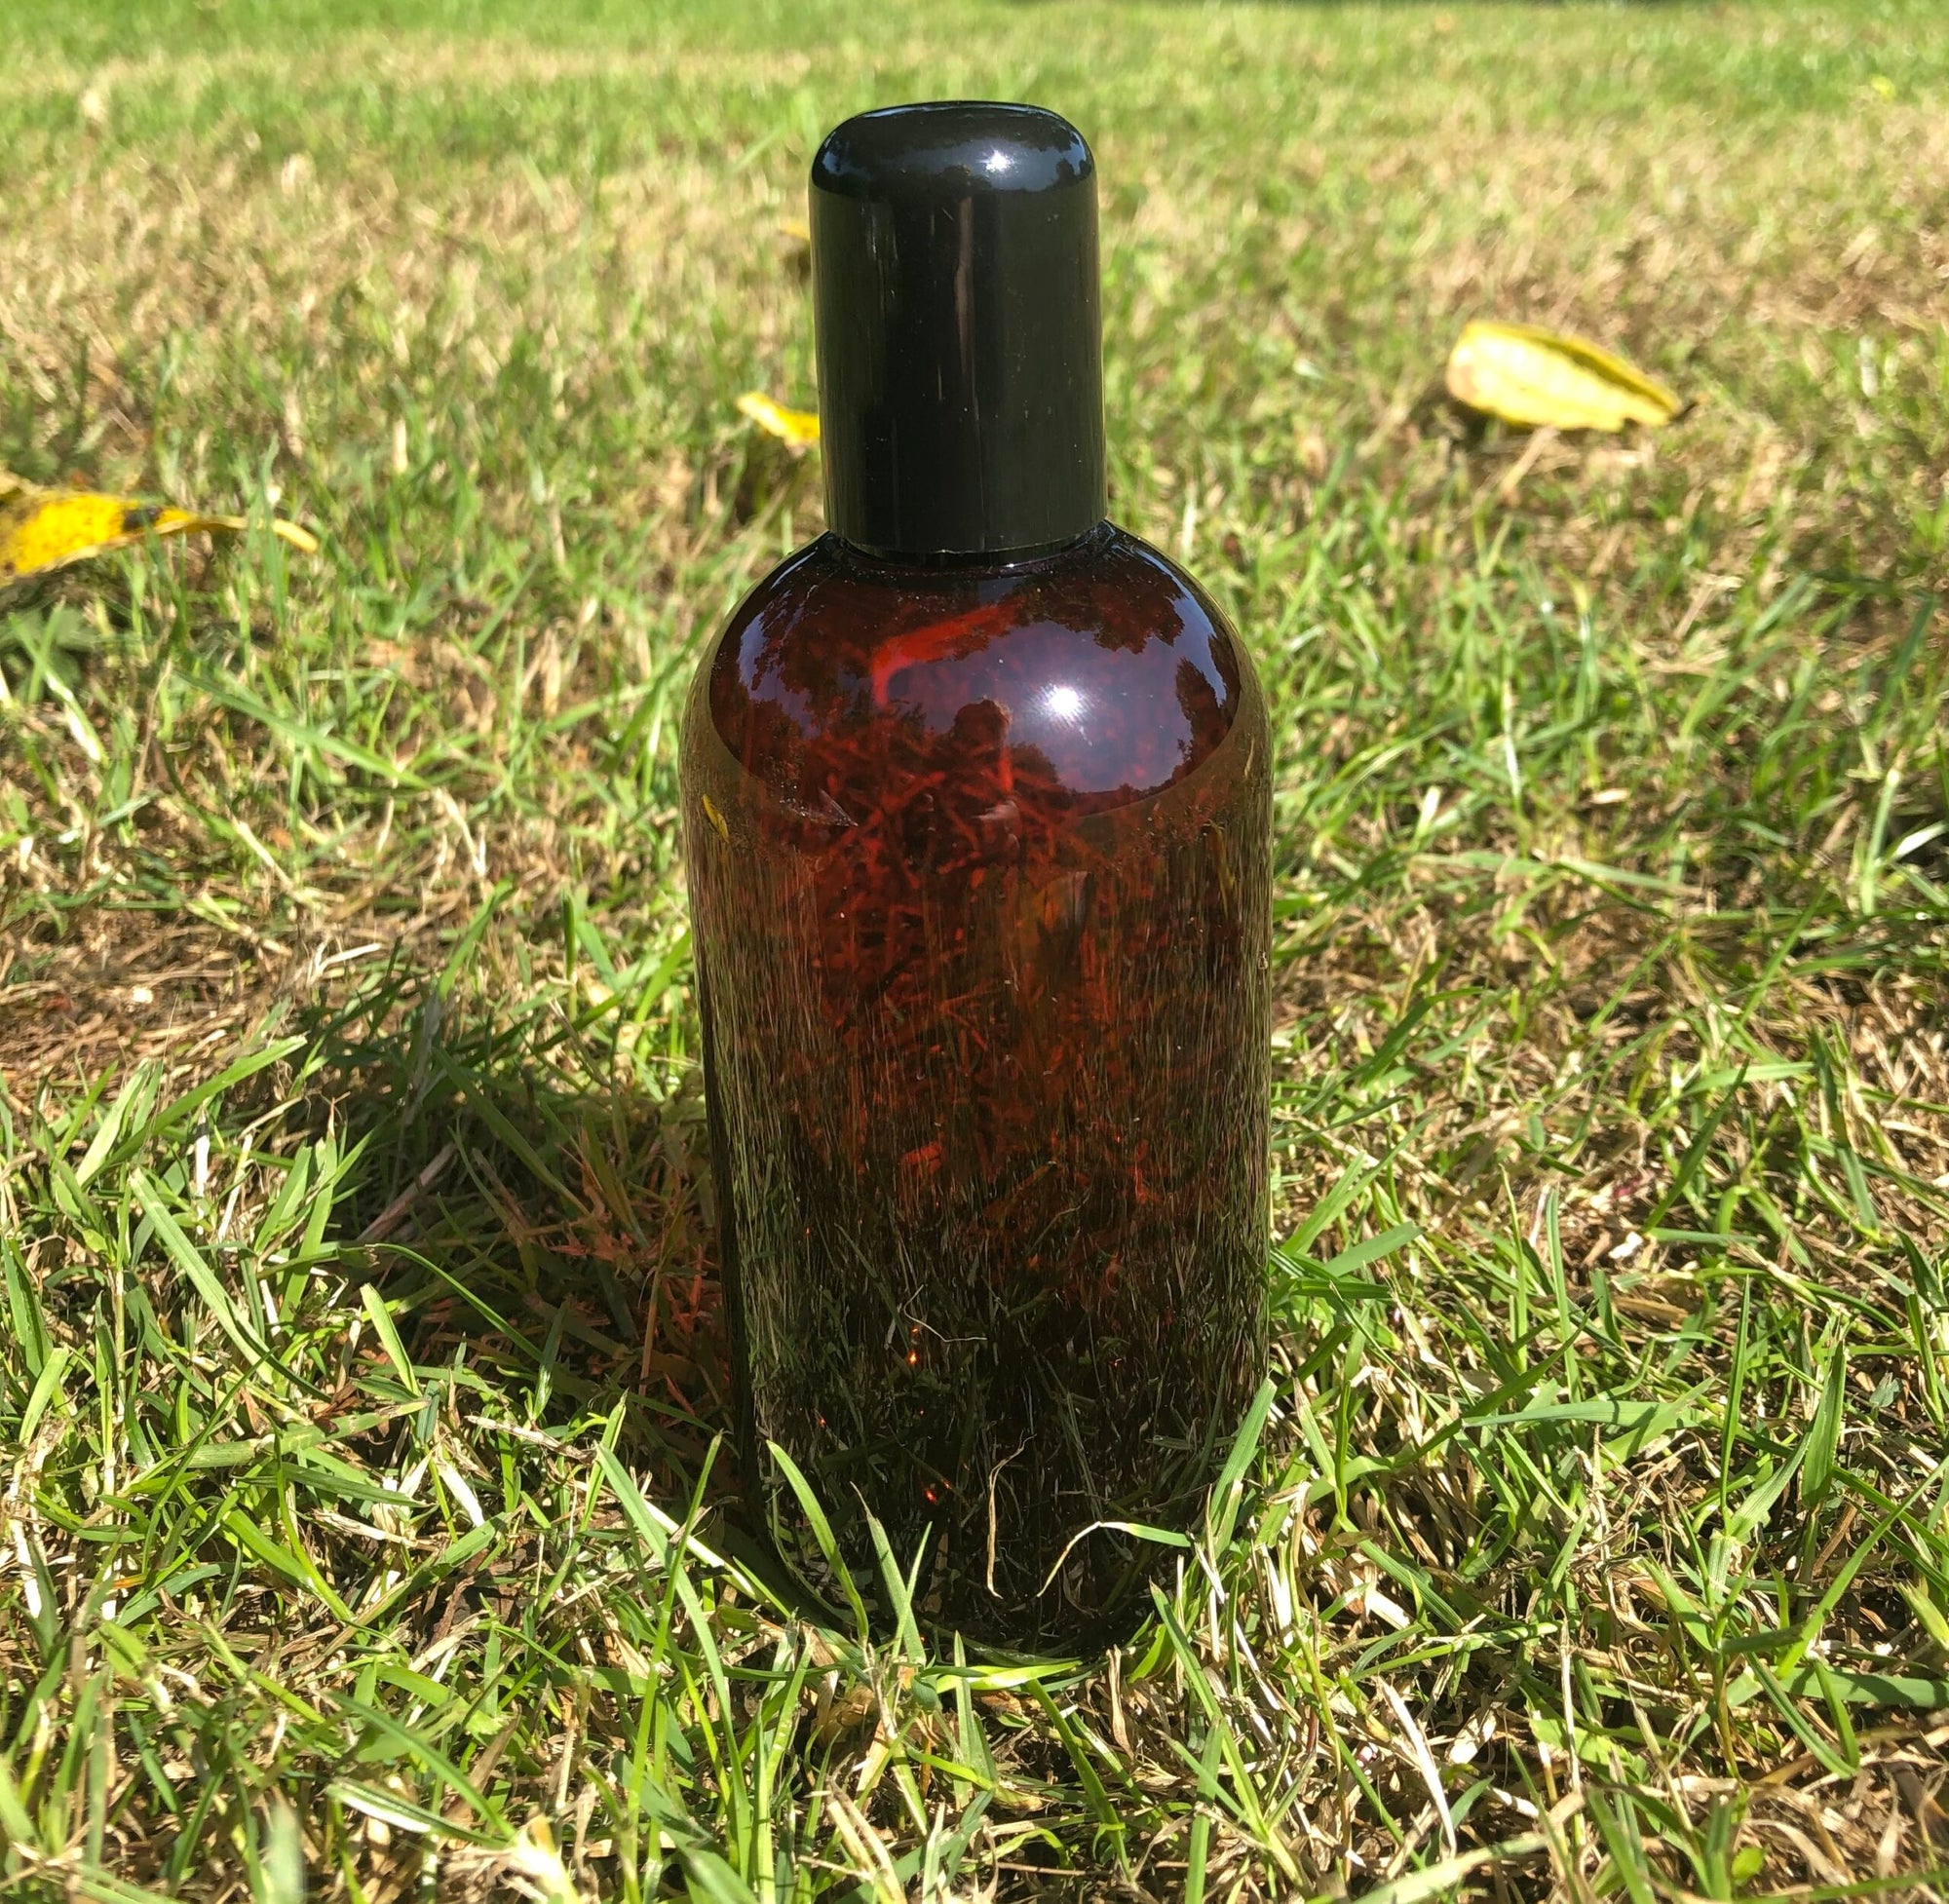 250ml Amber Plastic (PETG) bottle with cap